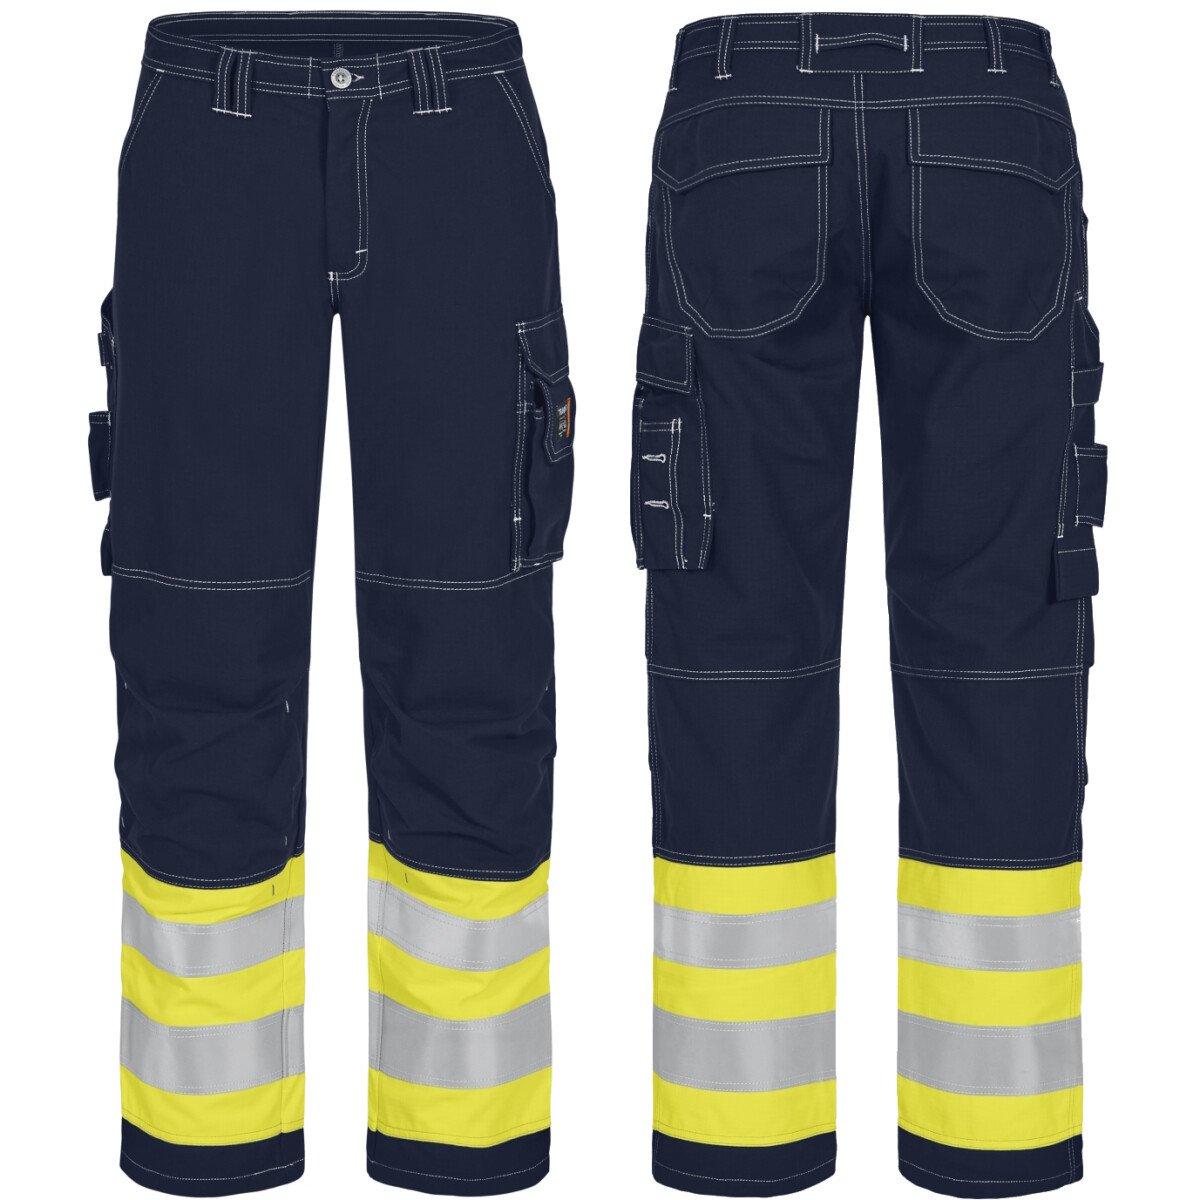 Tranemo 582181 Flame Retardant trousers HiVis Yellow/Navy C58 42" waist